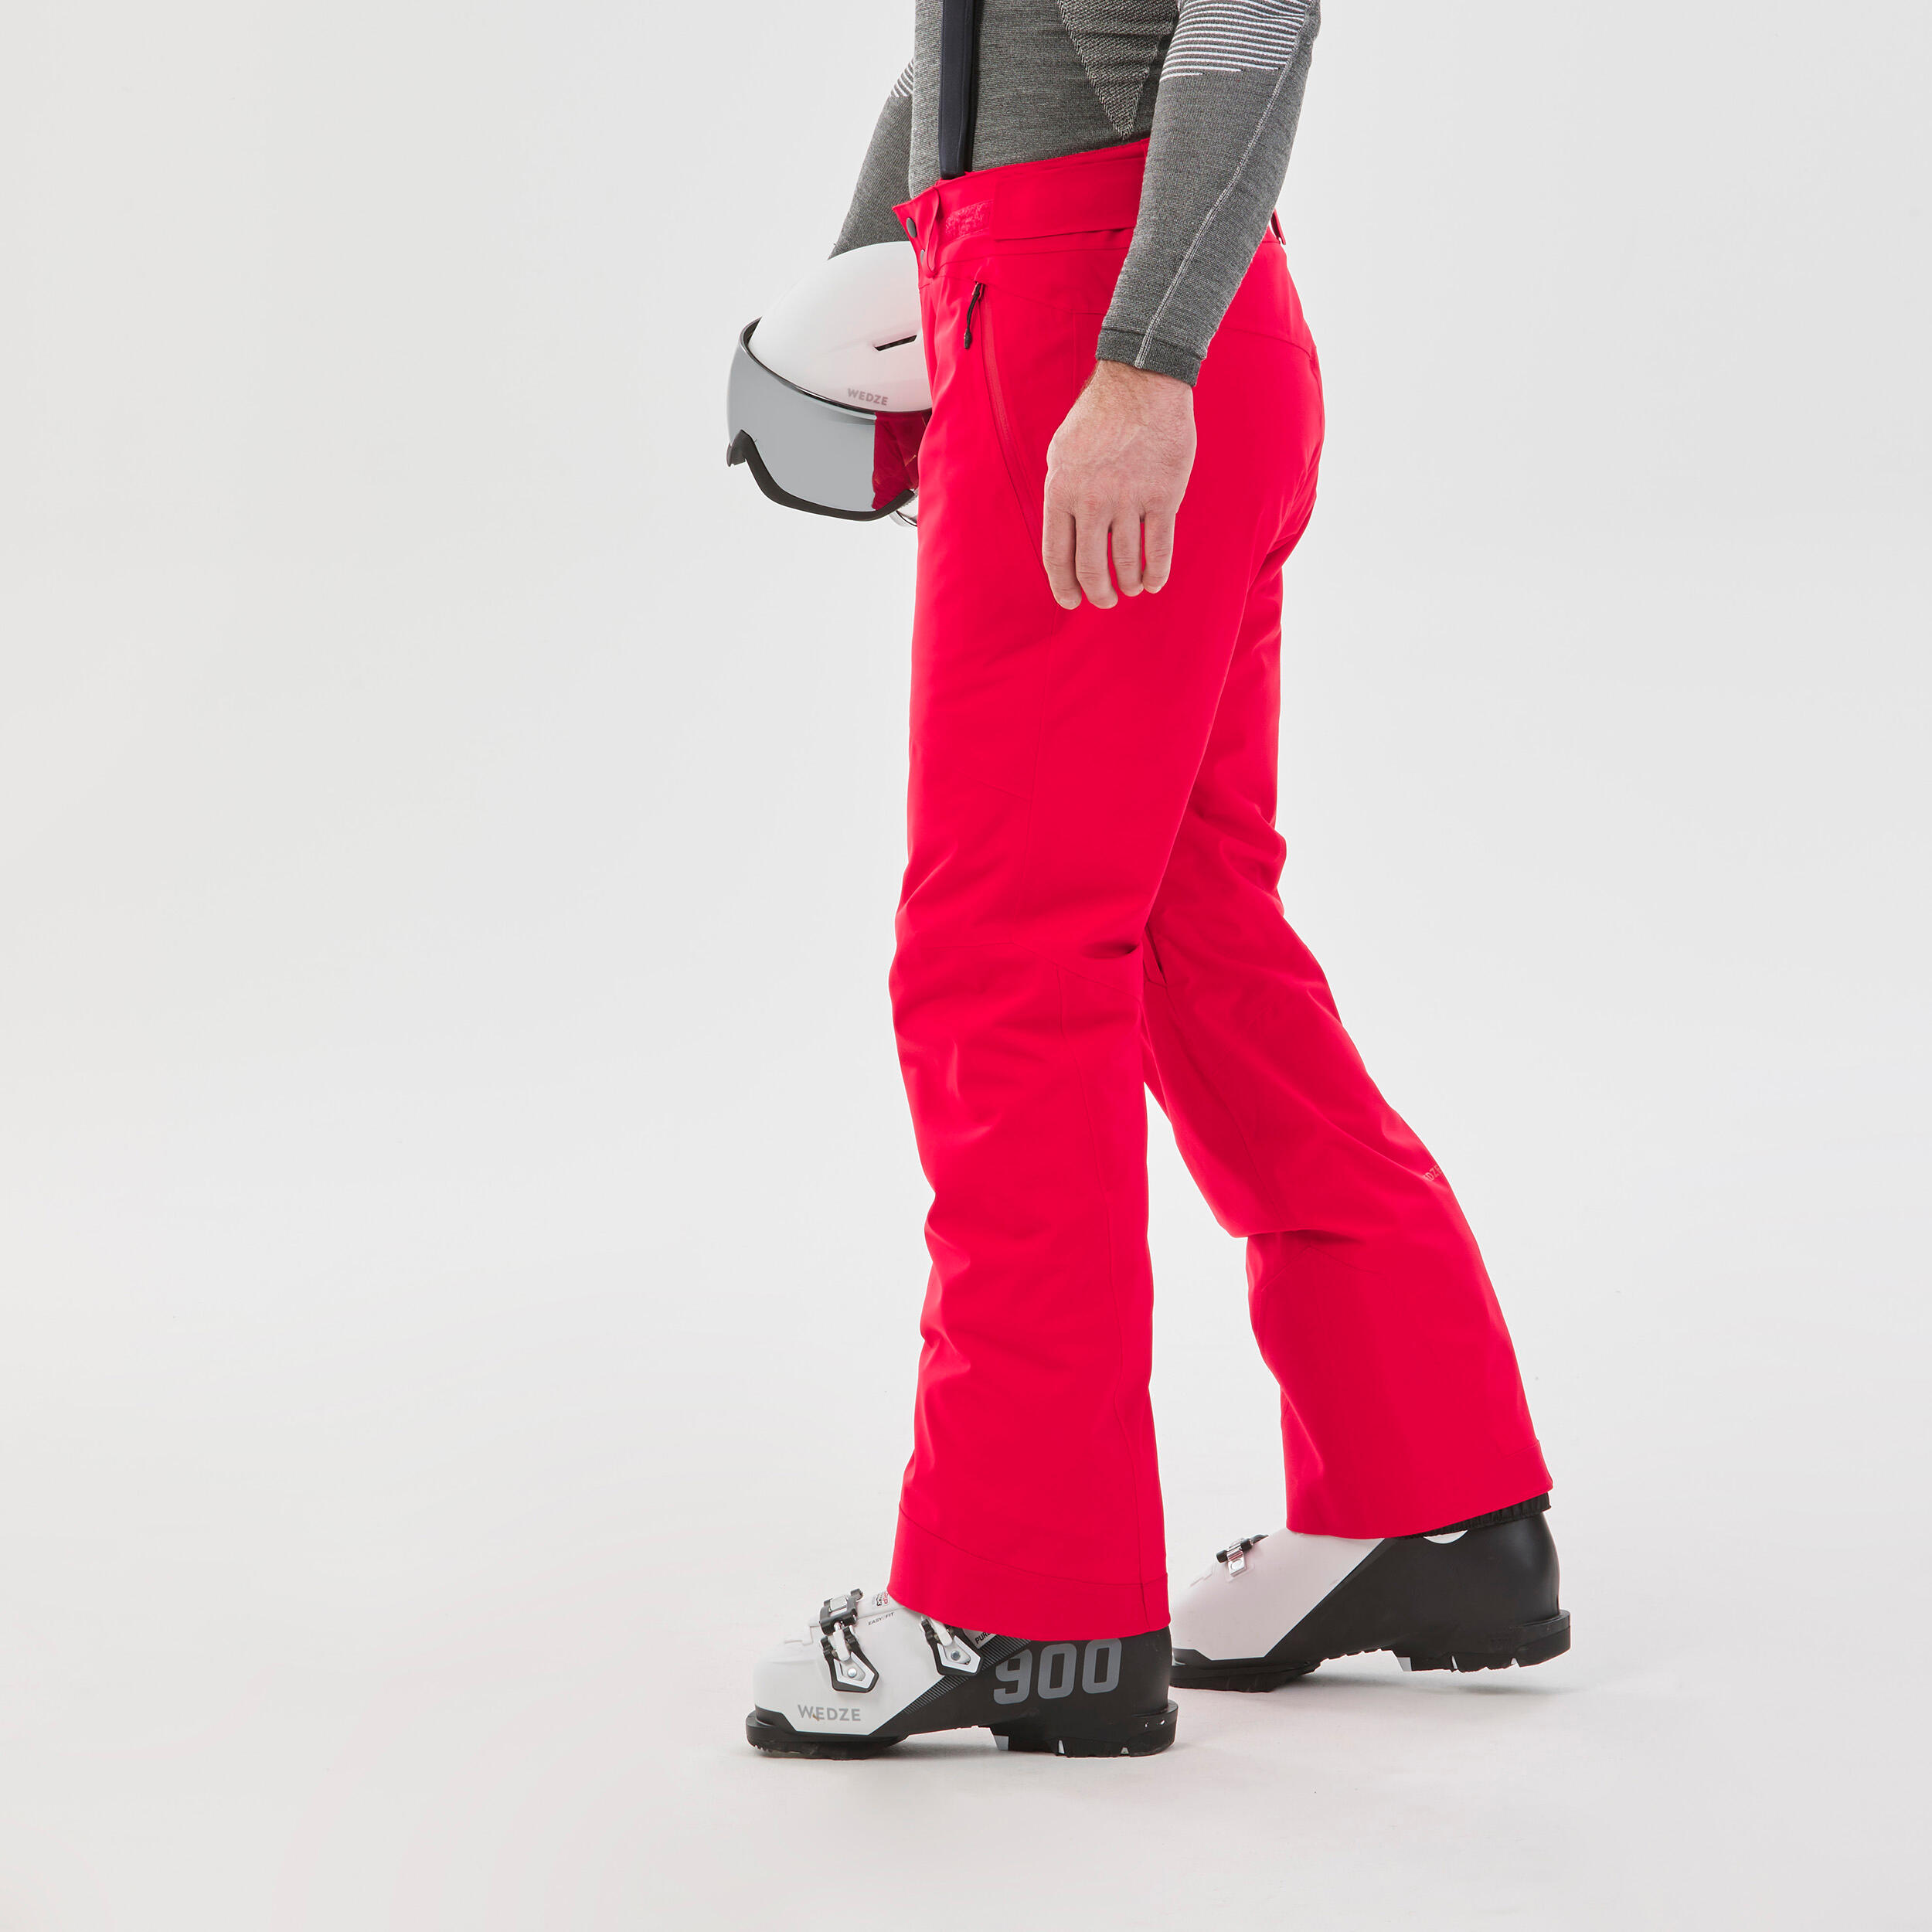 Men's Warm Ski Trousers - 580 - Red 4/11